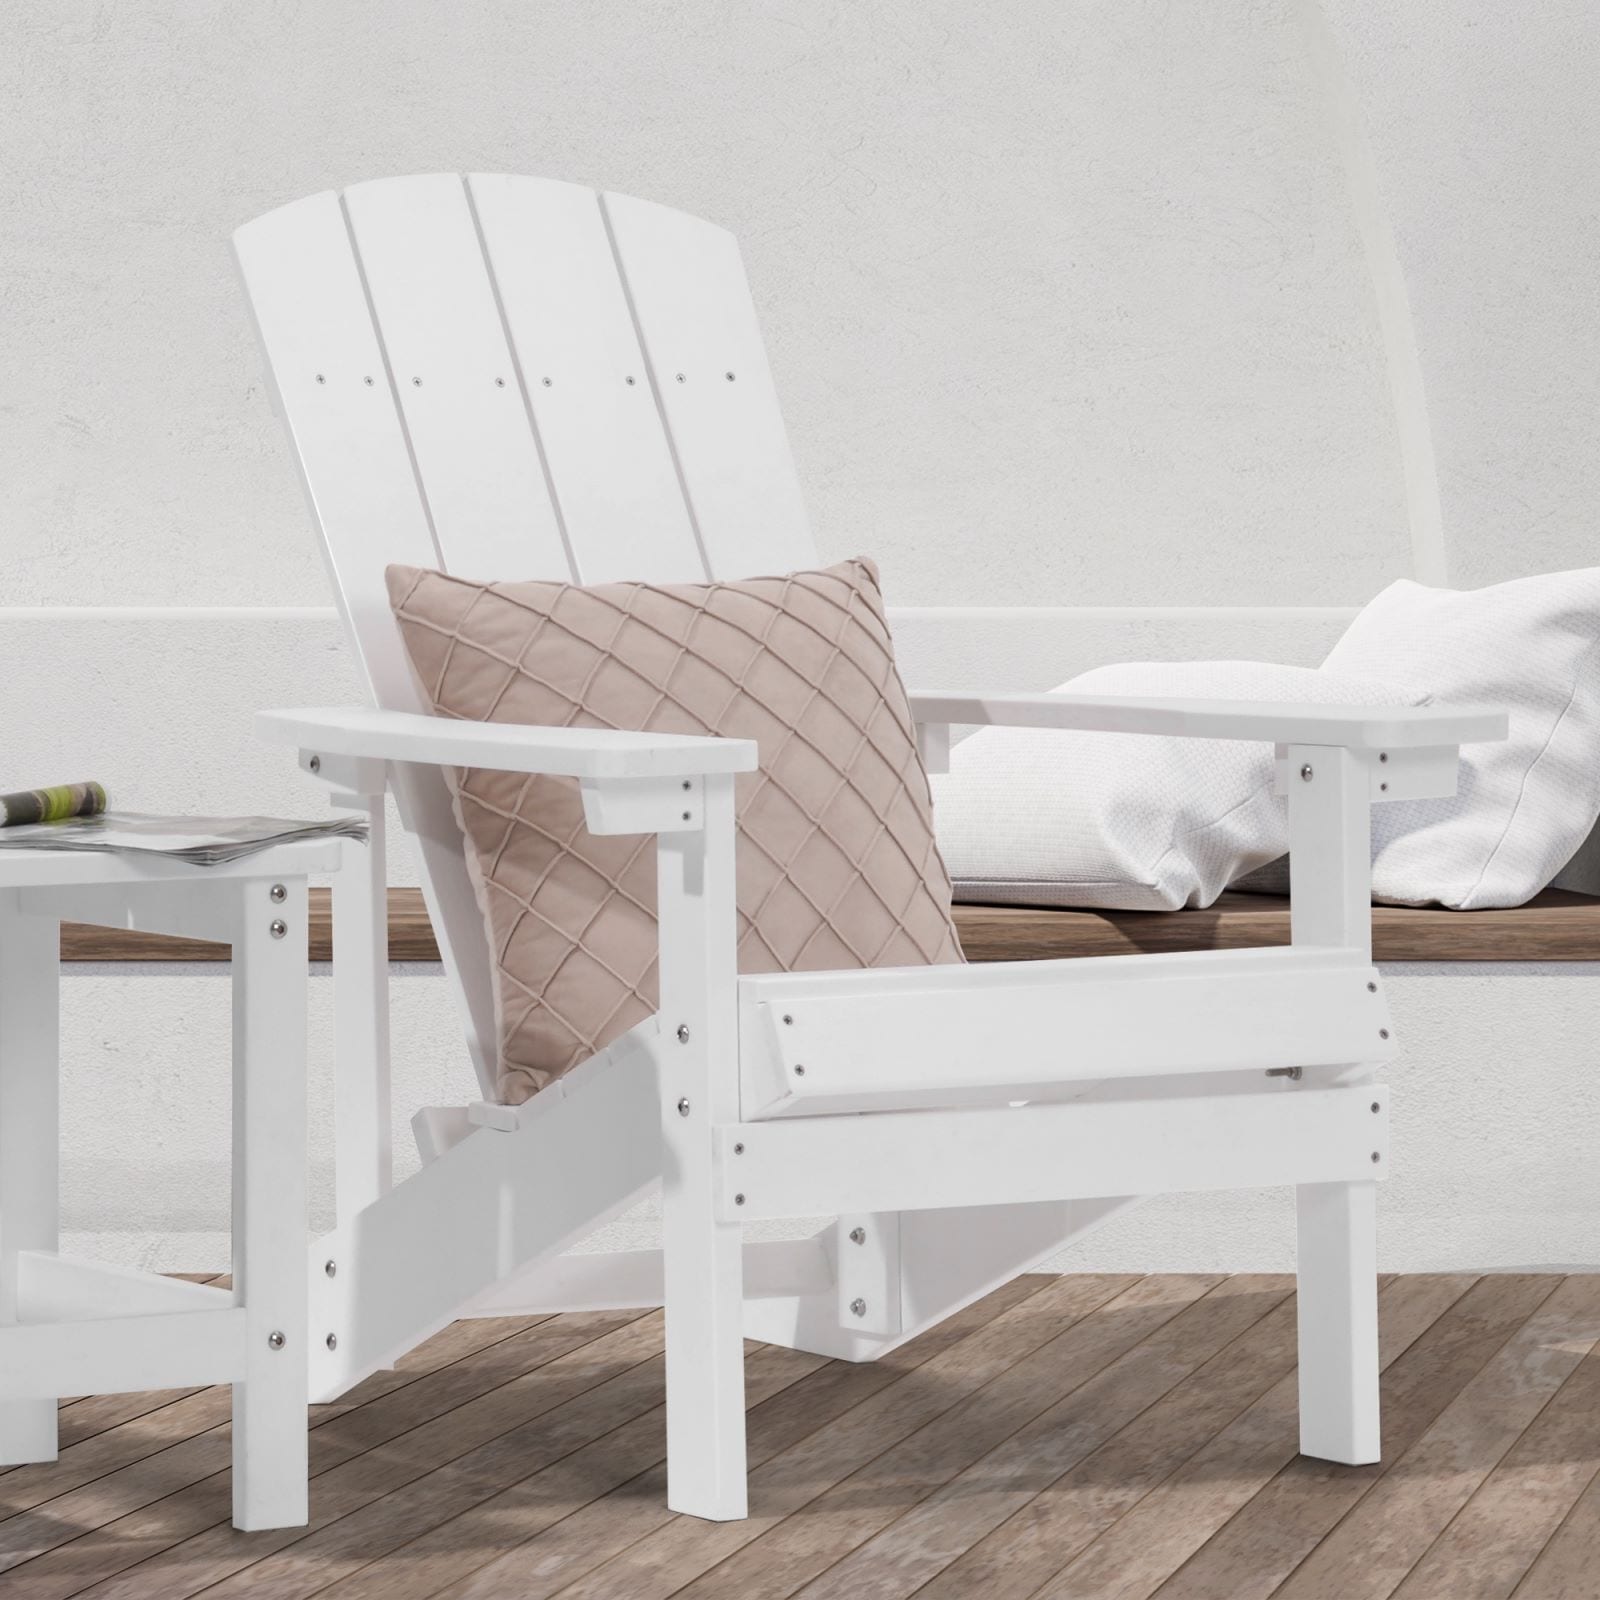 Bonosuki Outdoor Hips Weather-resistant Plastic Adirondack Chairs